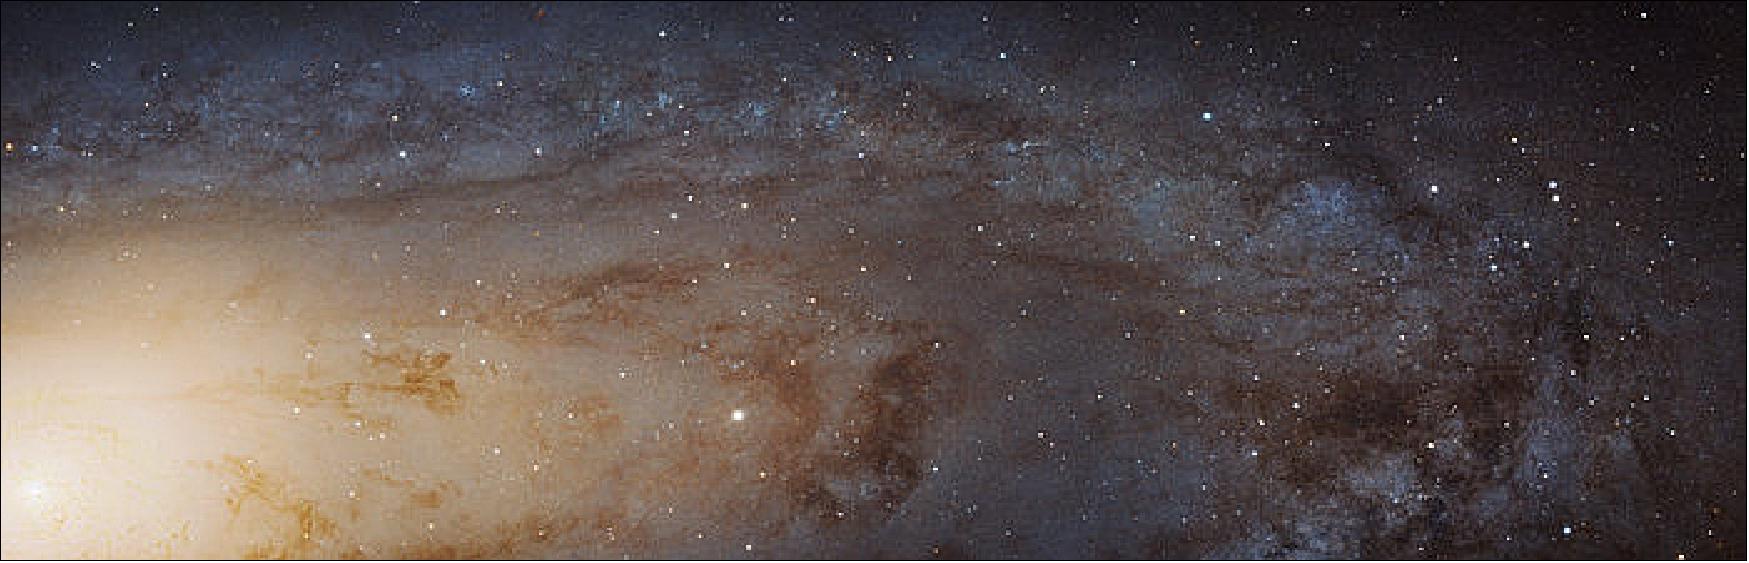 Figure 26: Sharpest ever view of the Andromeda Galaxy [image credit: NASA, ESA, J. Dalcanton (University of Washington, USA), B. F. Williams (University of Washington, USA), L. C. Johnson (University of Washington, USA), the PHAT team, and R. Gendler]